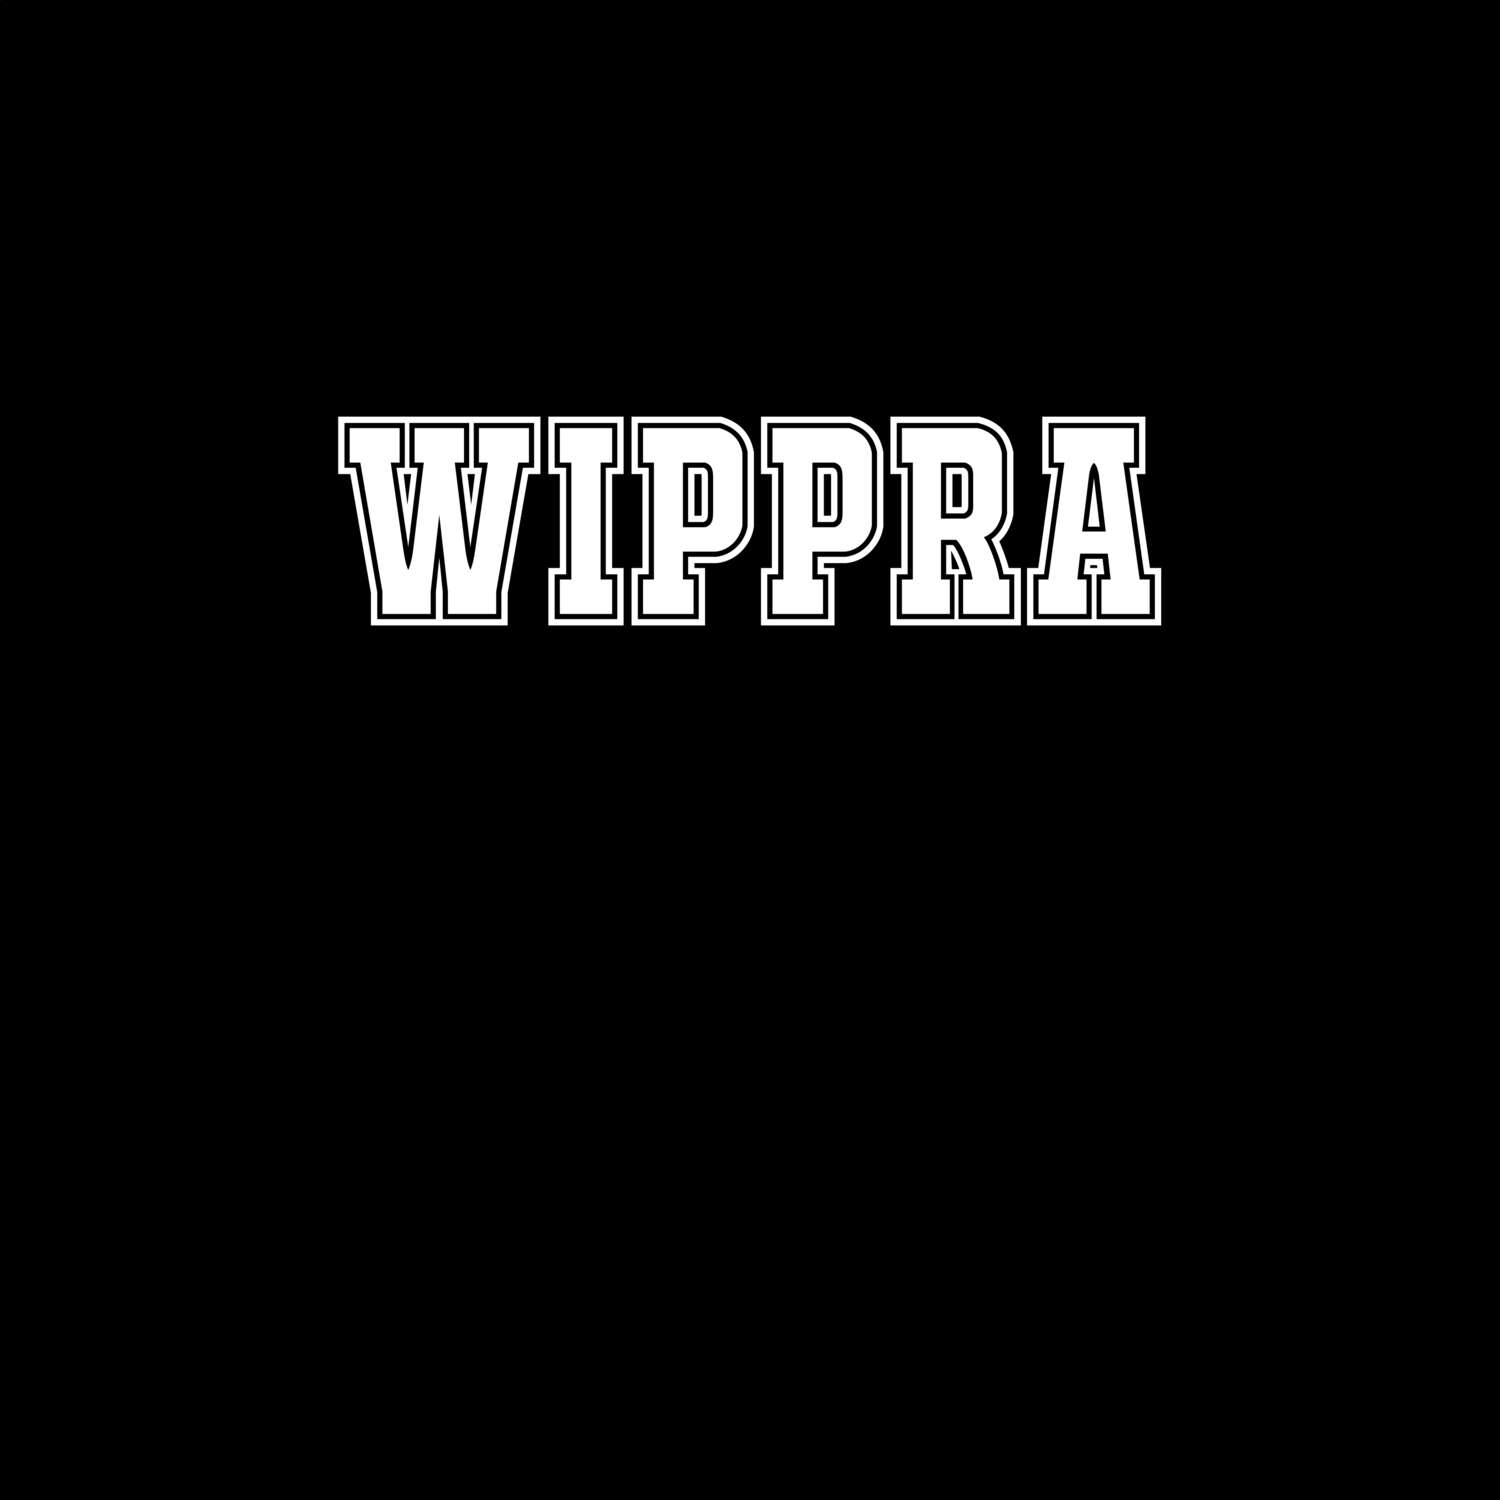 Wippra T-Shirt »Classic«